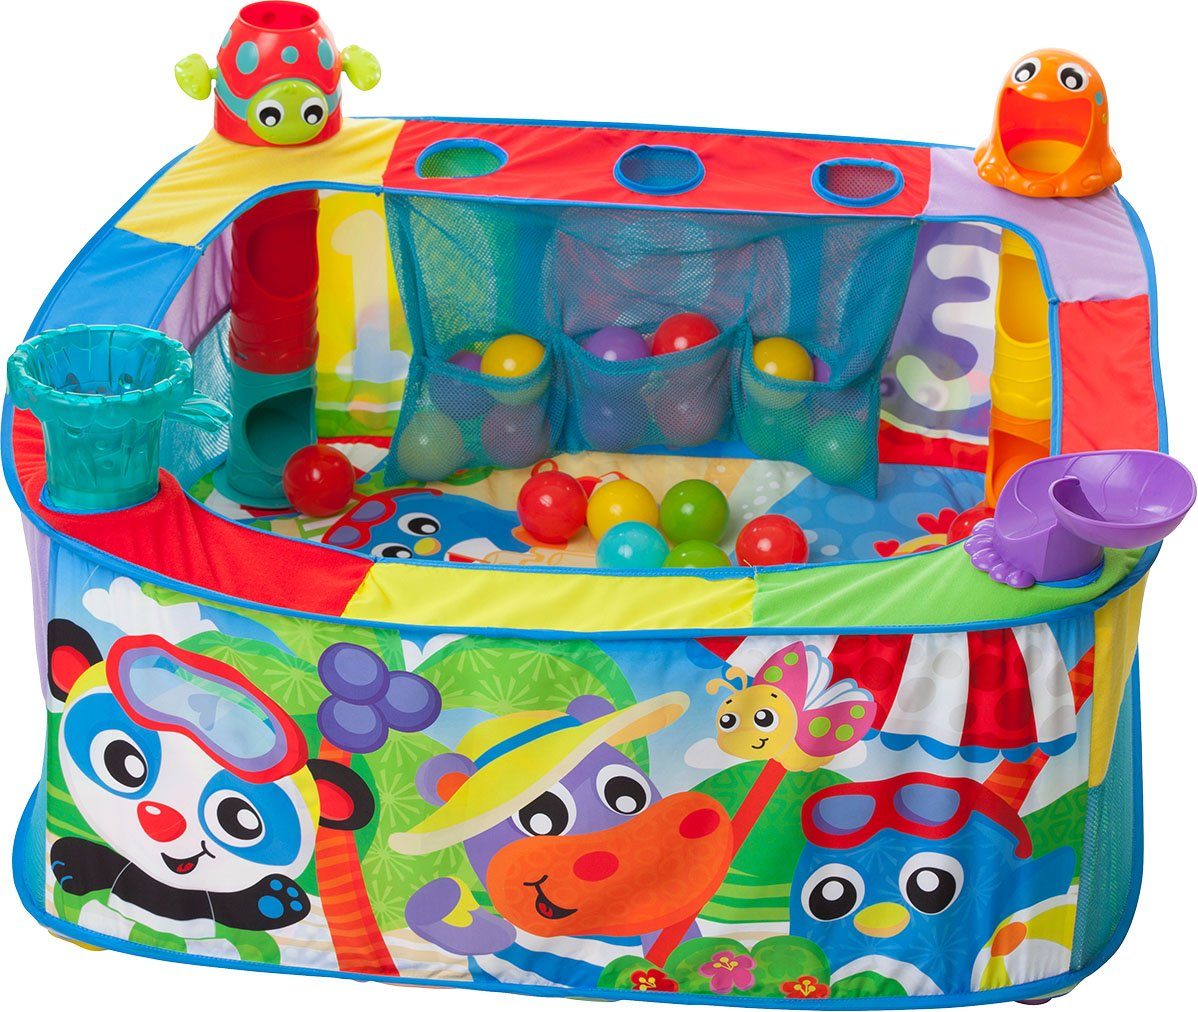 Playgro Bällebad Pop Up Baby Bällebad online kaufen | OTTO